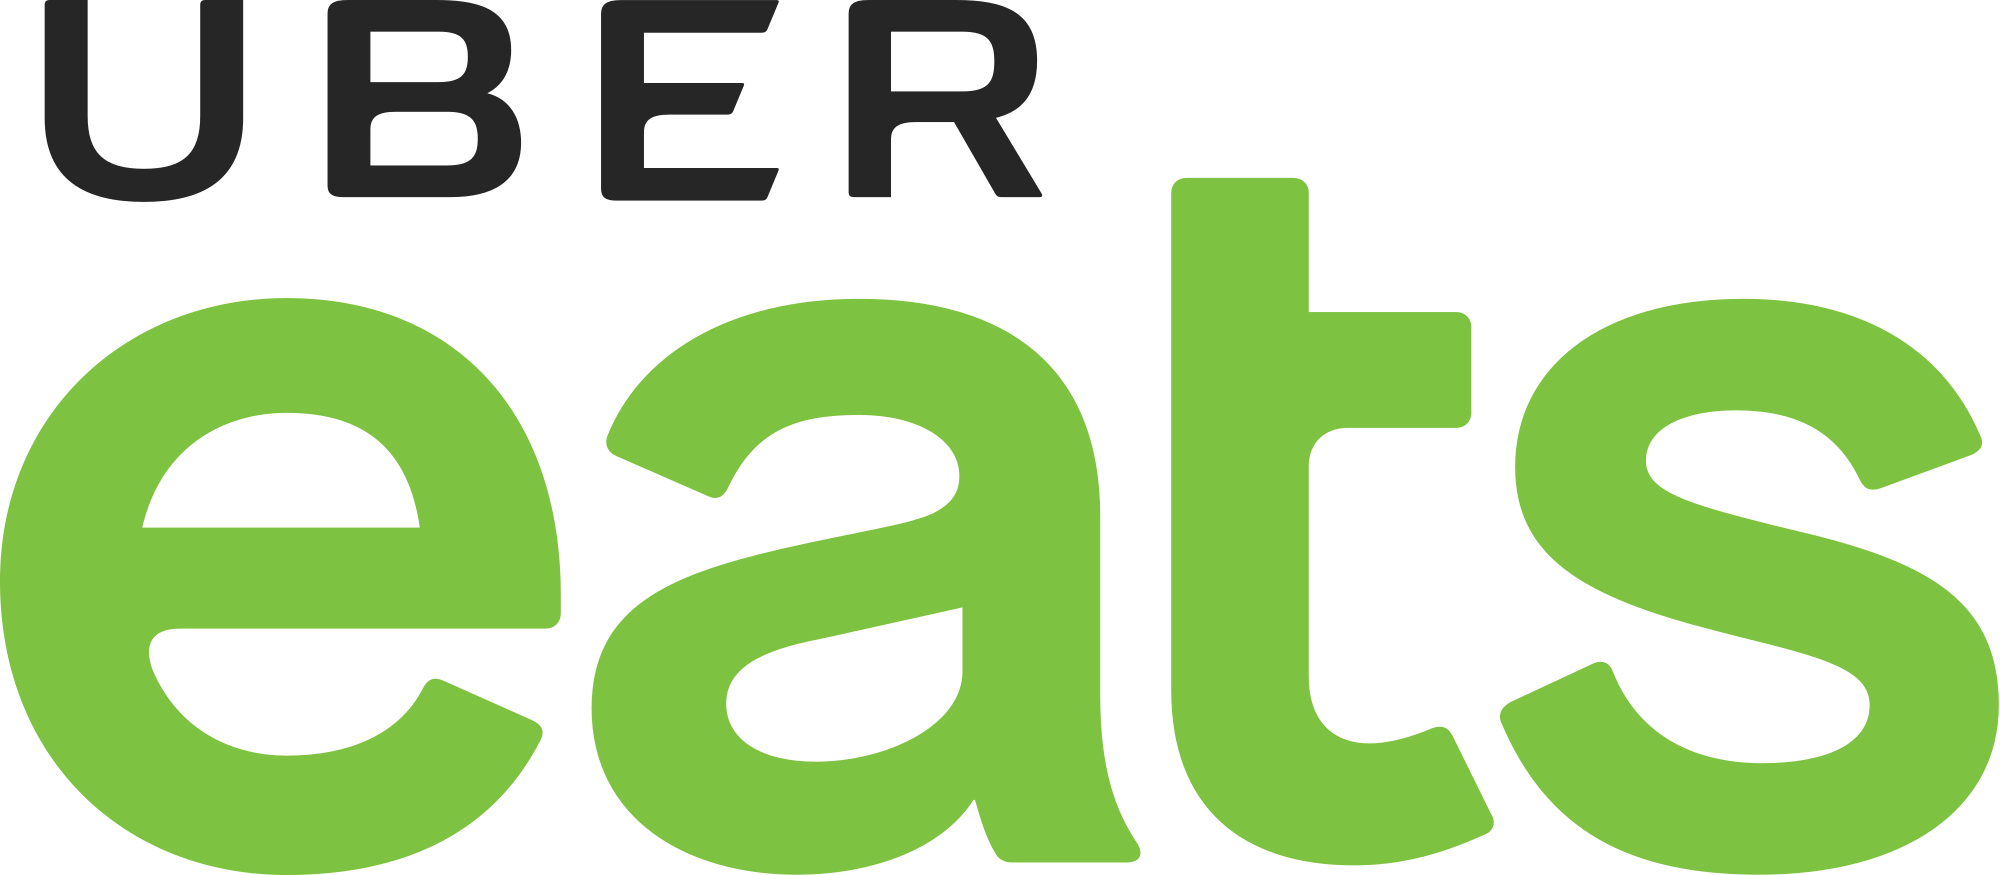 Uber Green Logo - UberEATS logo december 2017.svg